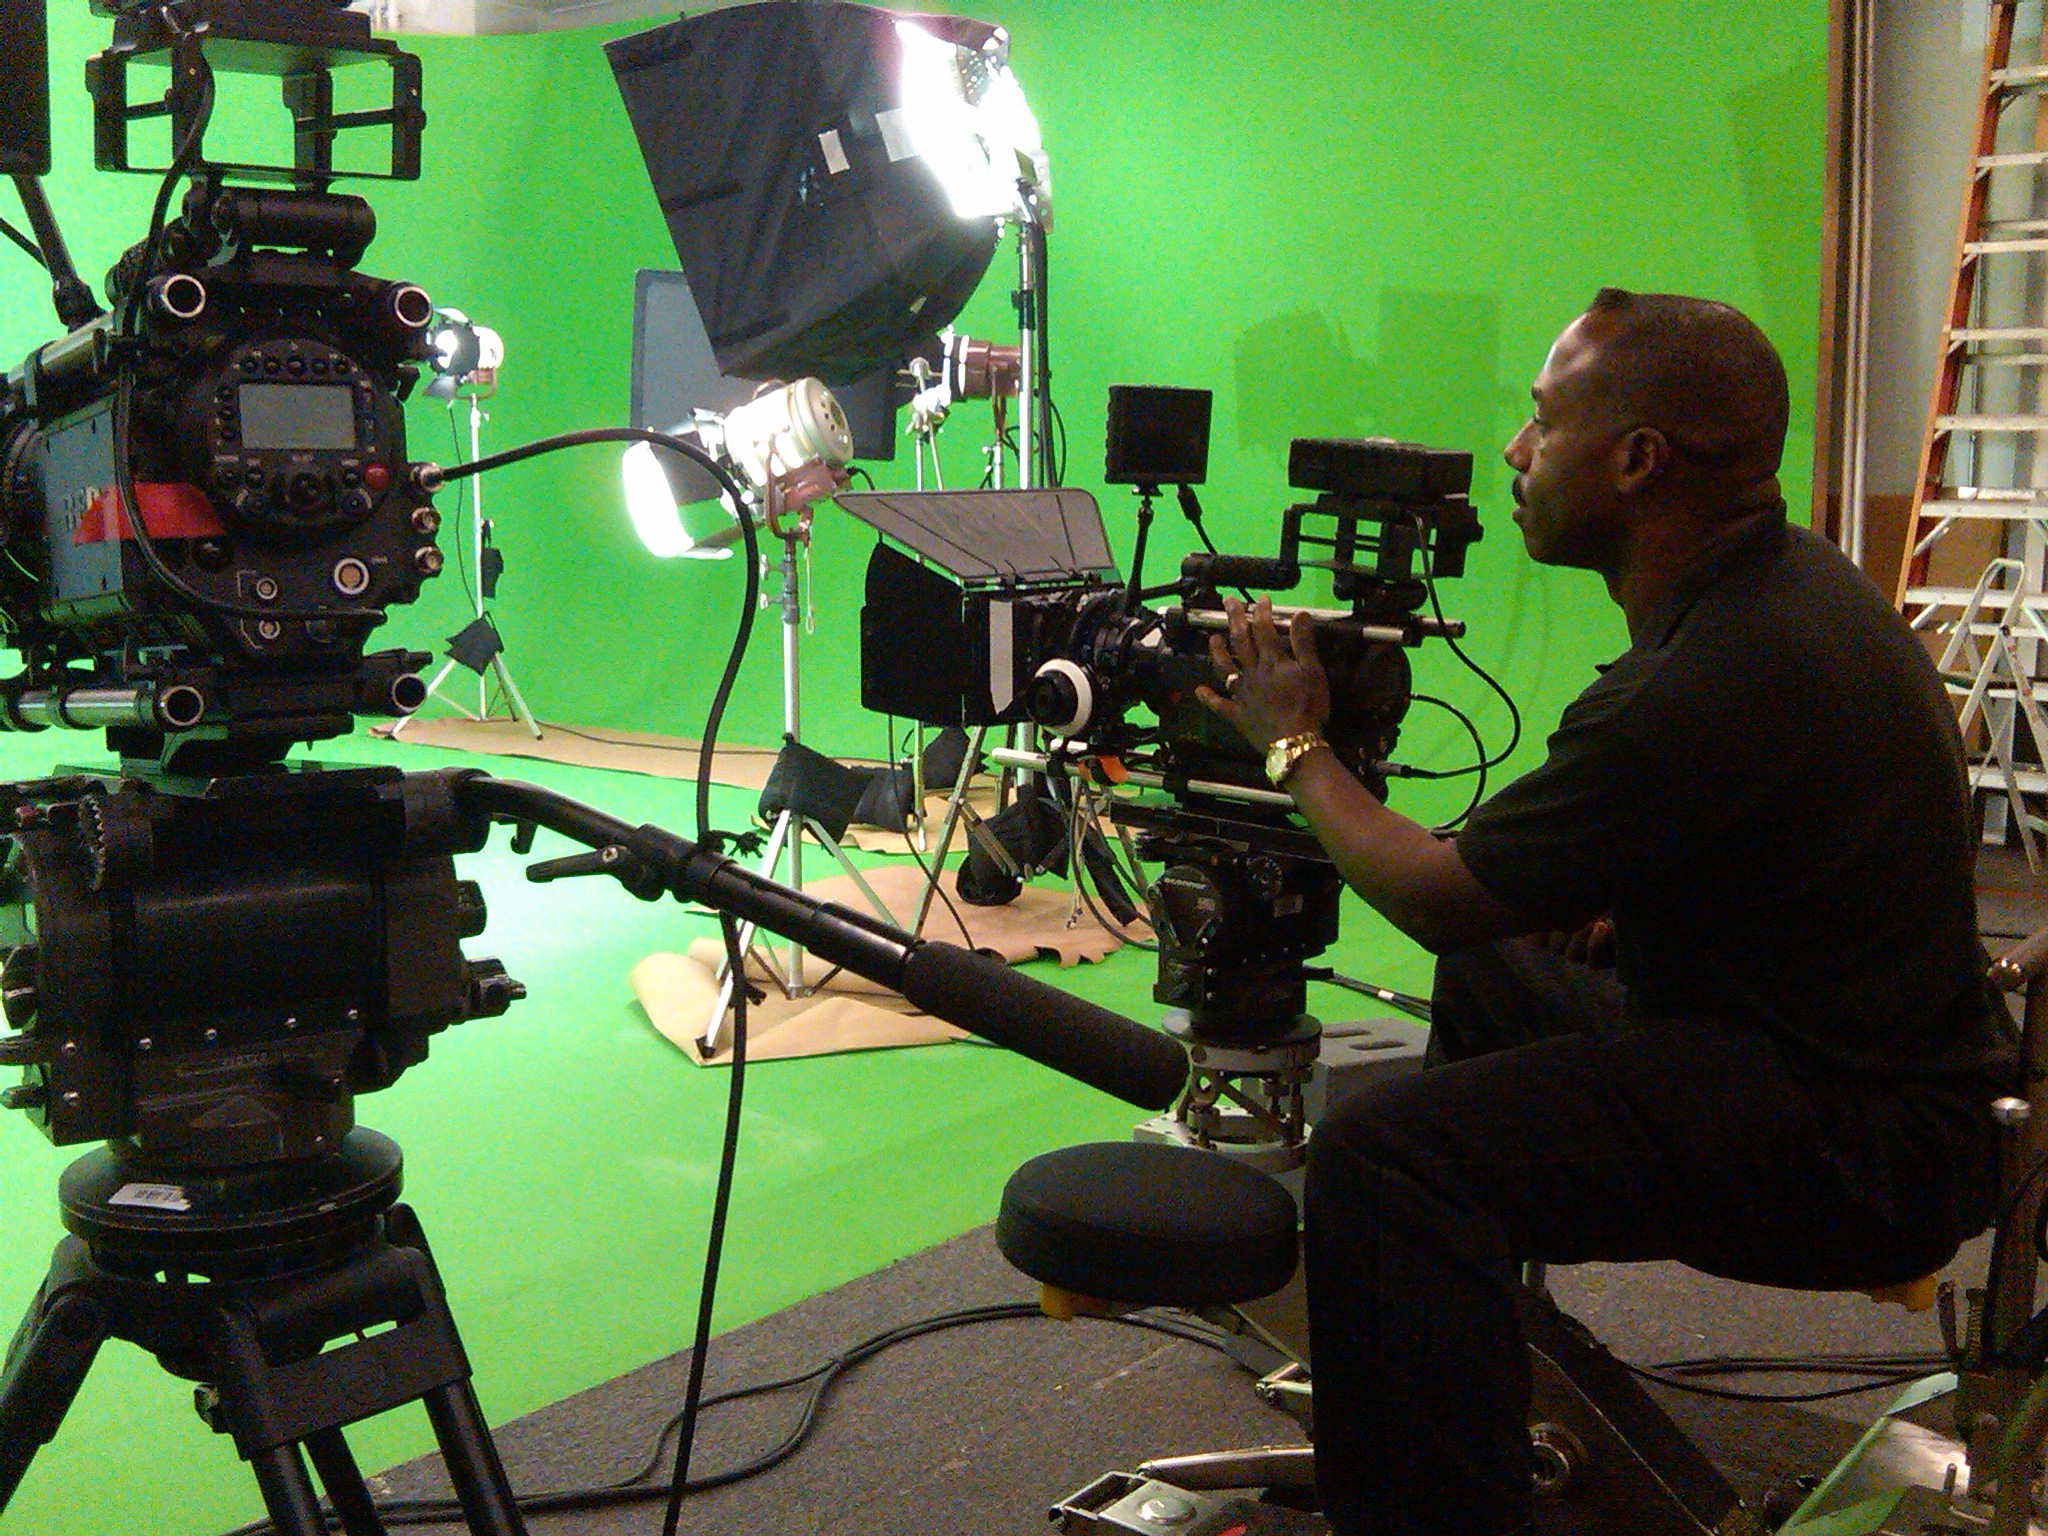 Director Bruce B. Gordon surveying RED camera set up for a green screen SFX shoot.